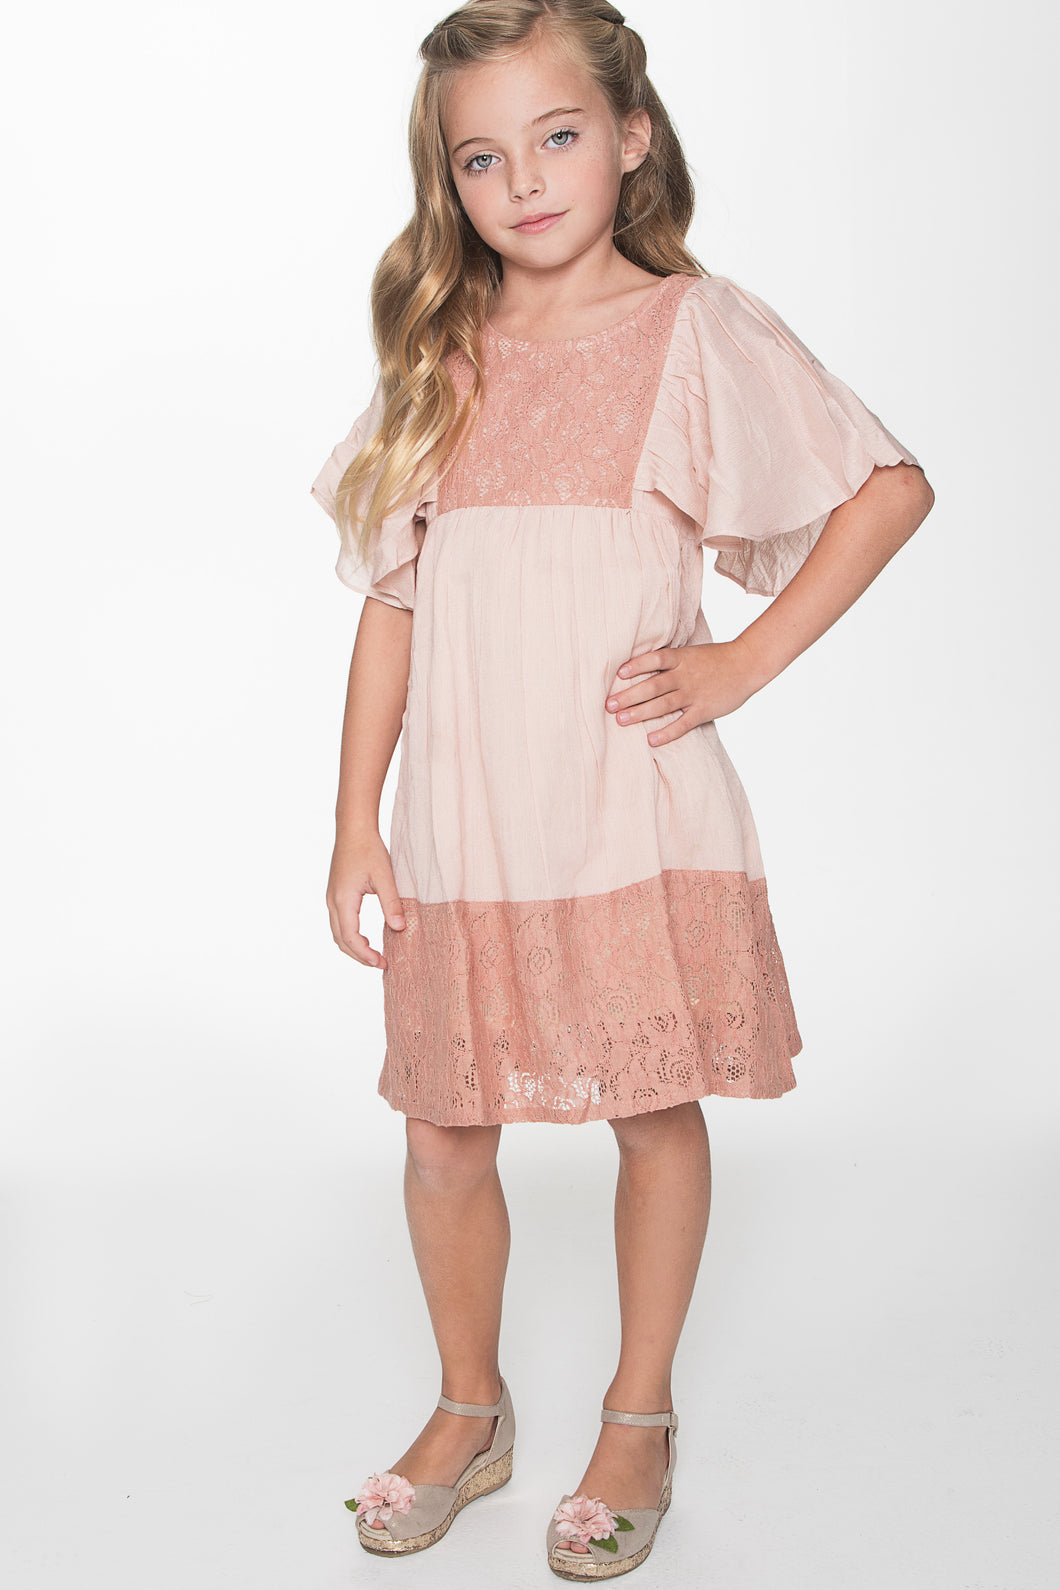 Blush Flounce Sleeve and Lace Dress - Kids Wholesale Boutique Clothing, Dress - Girls Dresses, Yo Baby Wholesale - Yo Baby